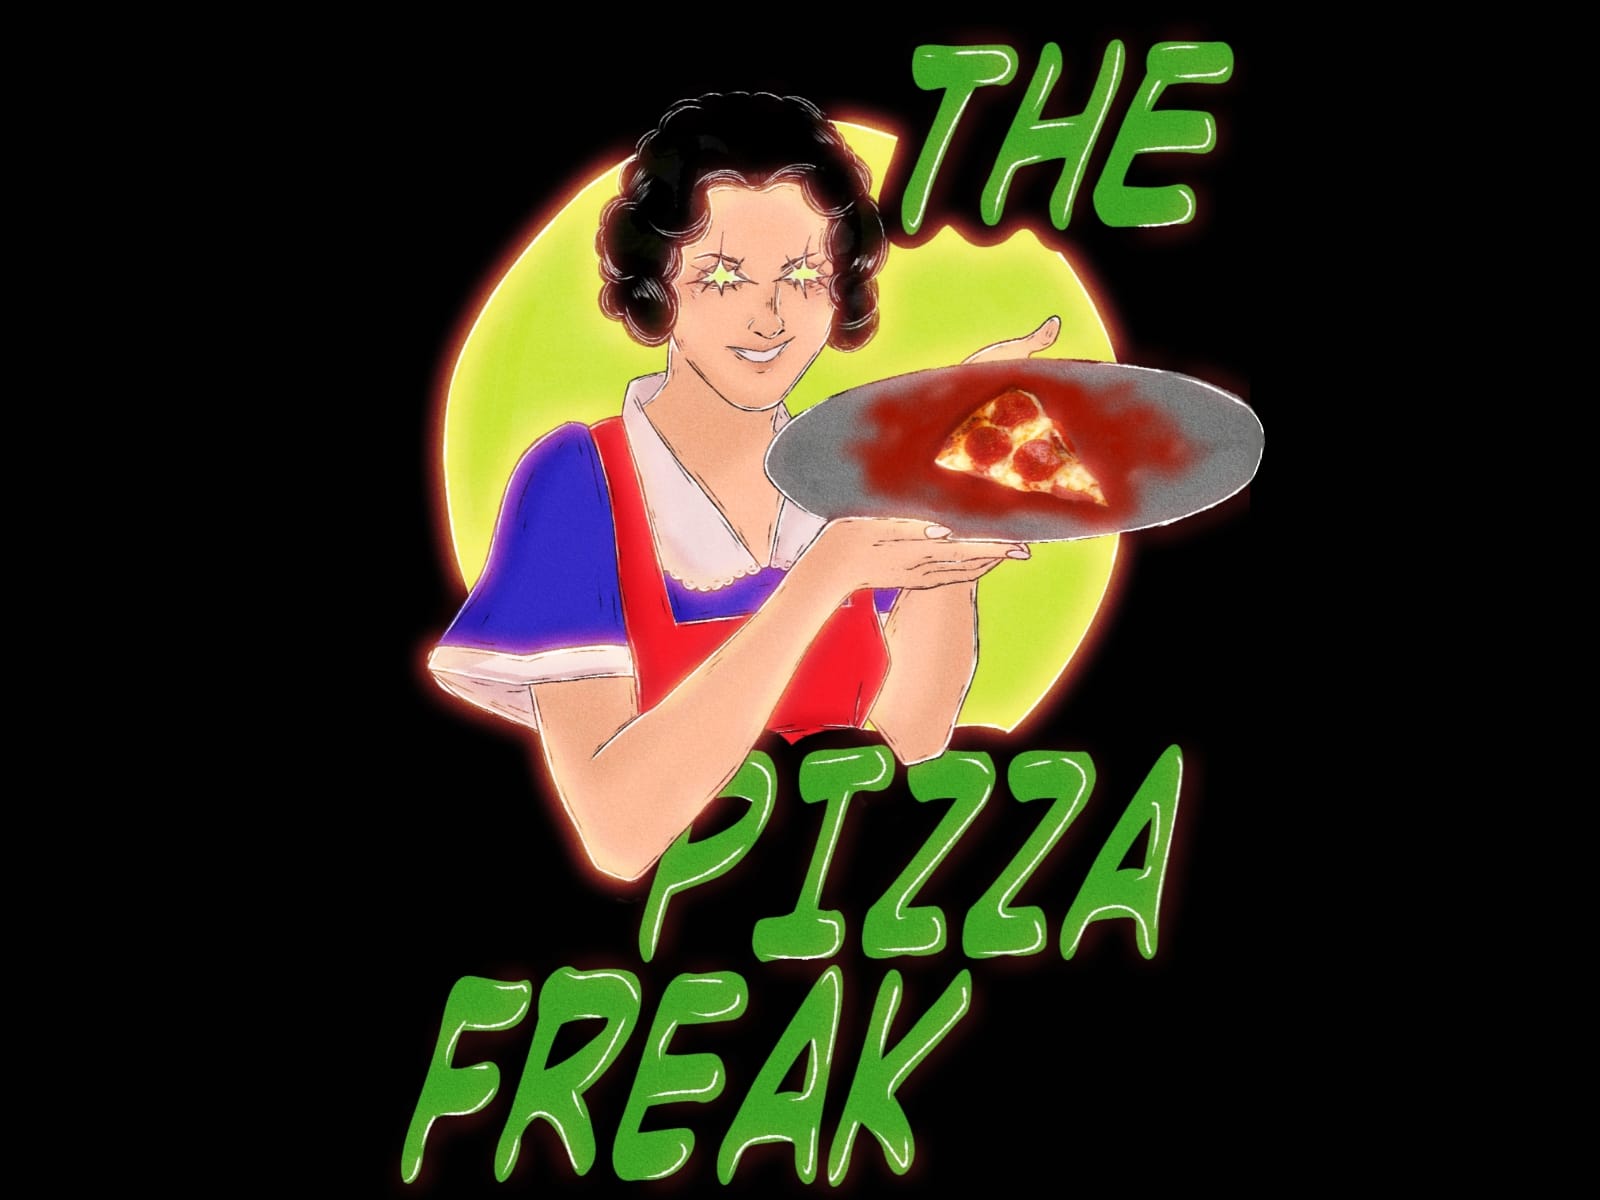 The Pizza Freak